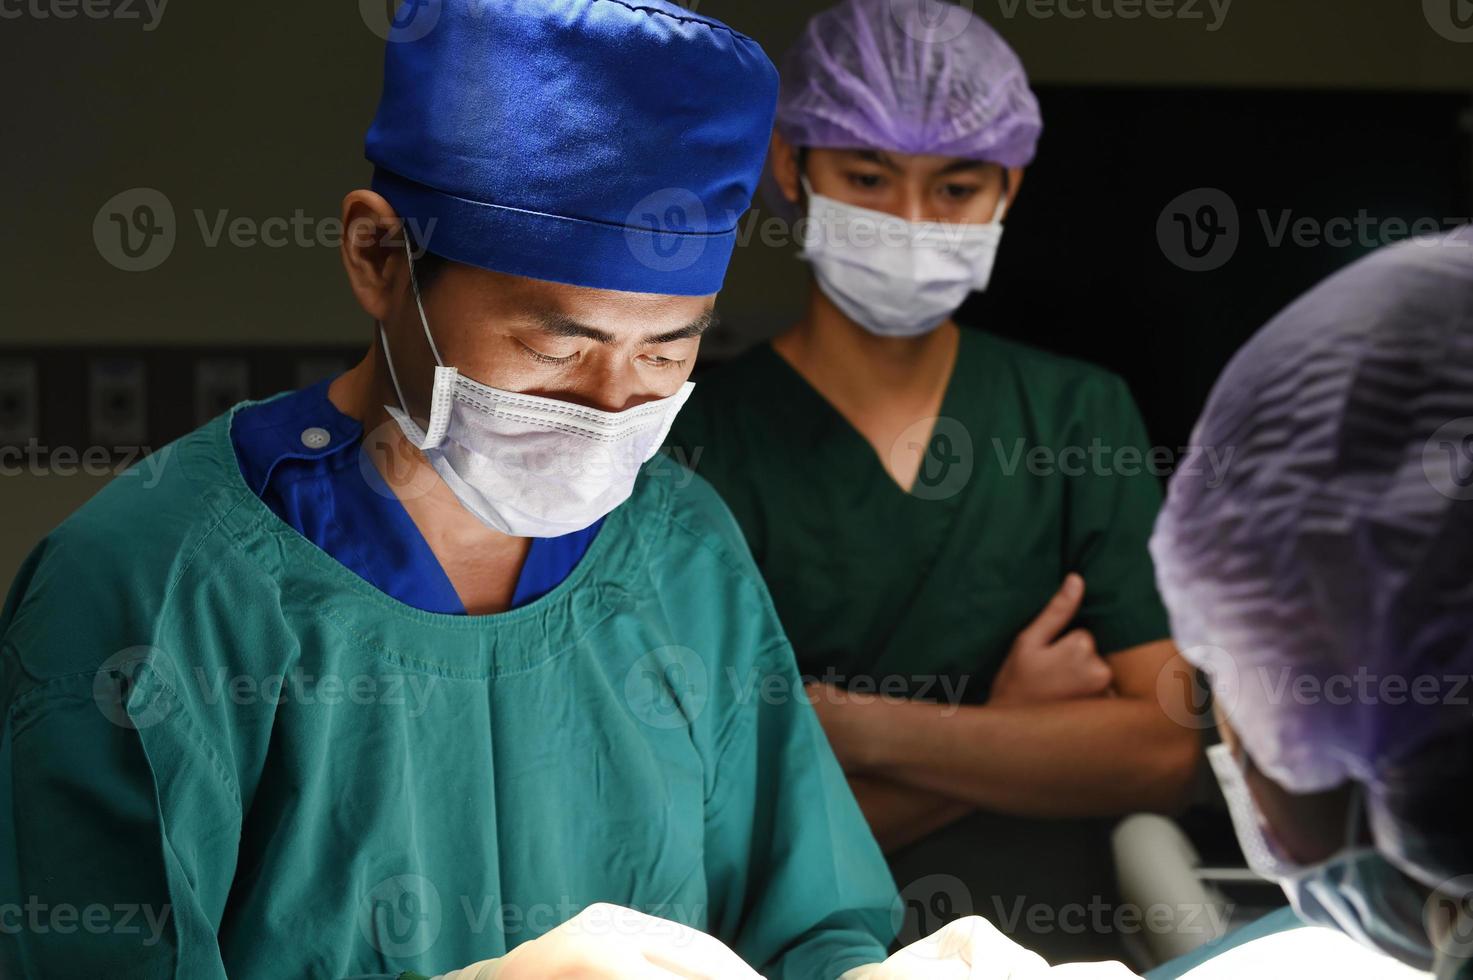 groep van veterinaire chirurgie in operatiekamer foto